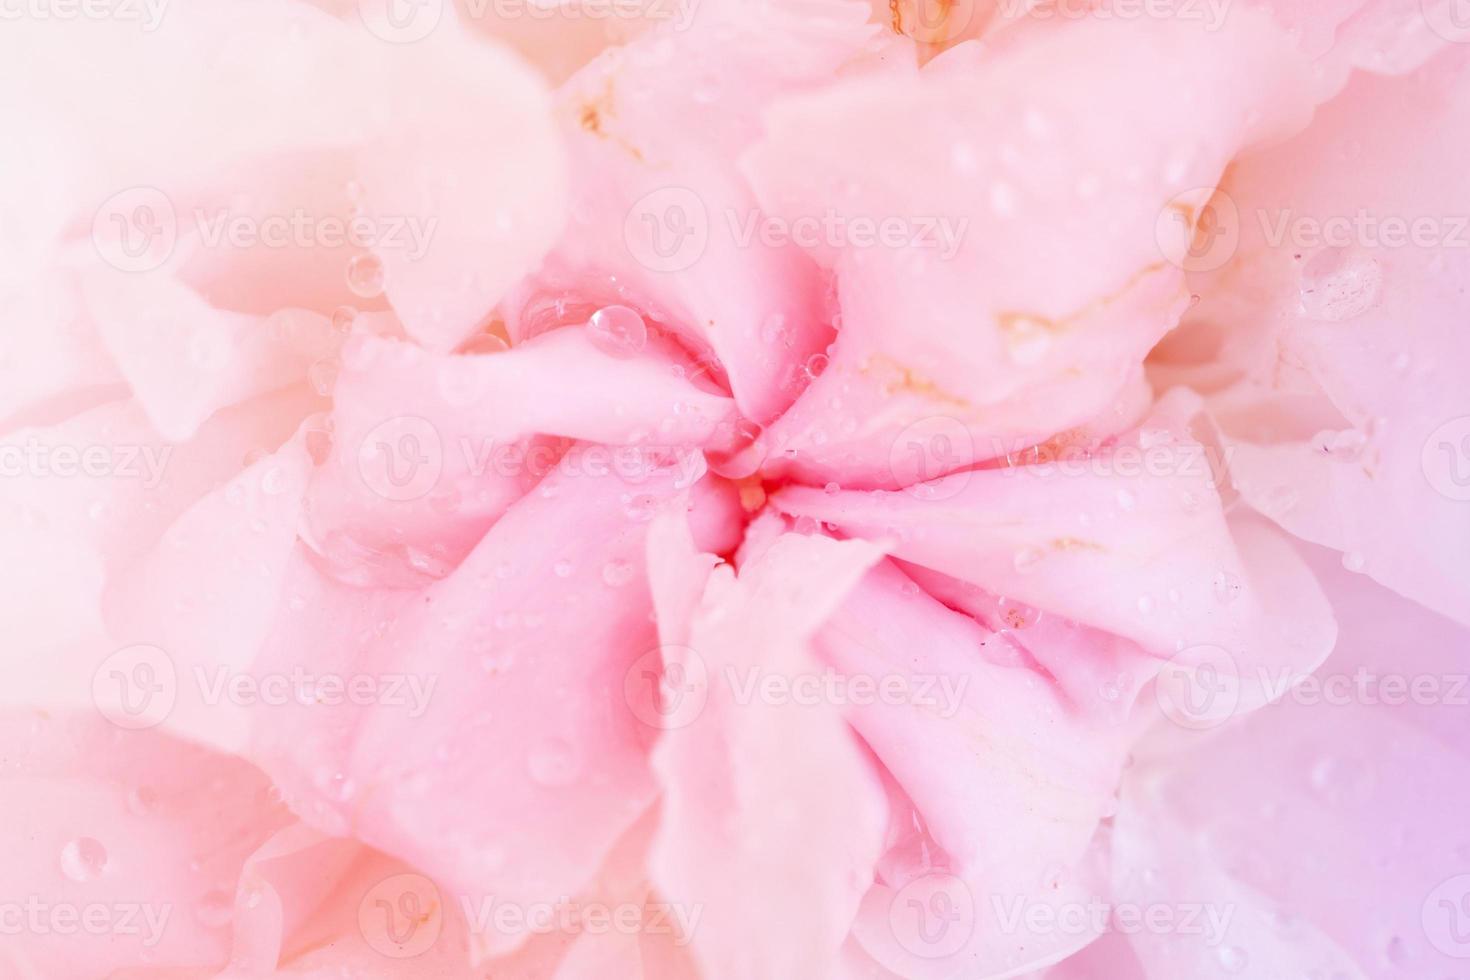 linda flor de rosas cor de rosa close-up abstrato foto